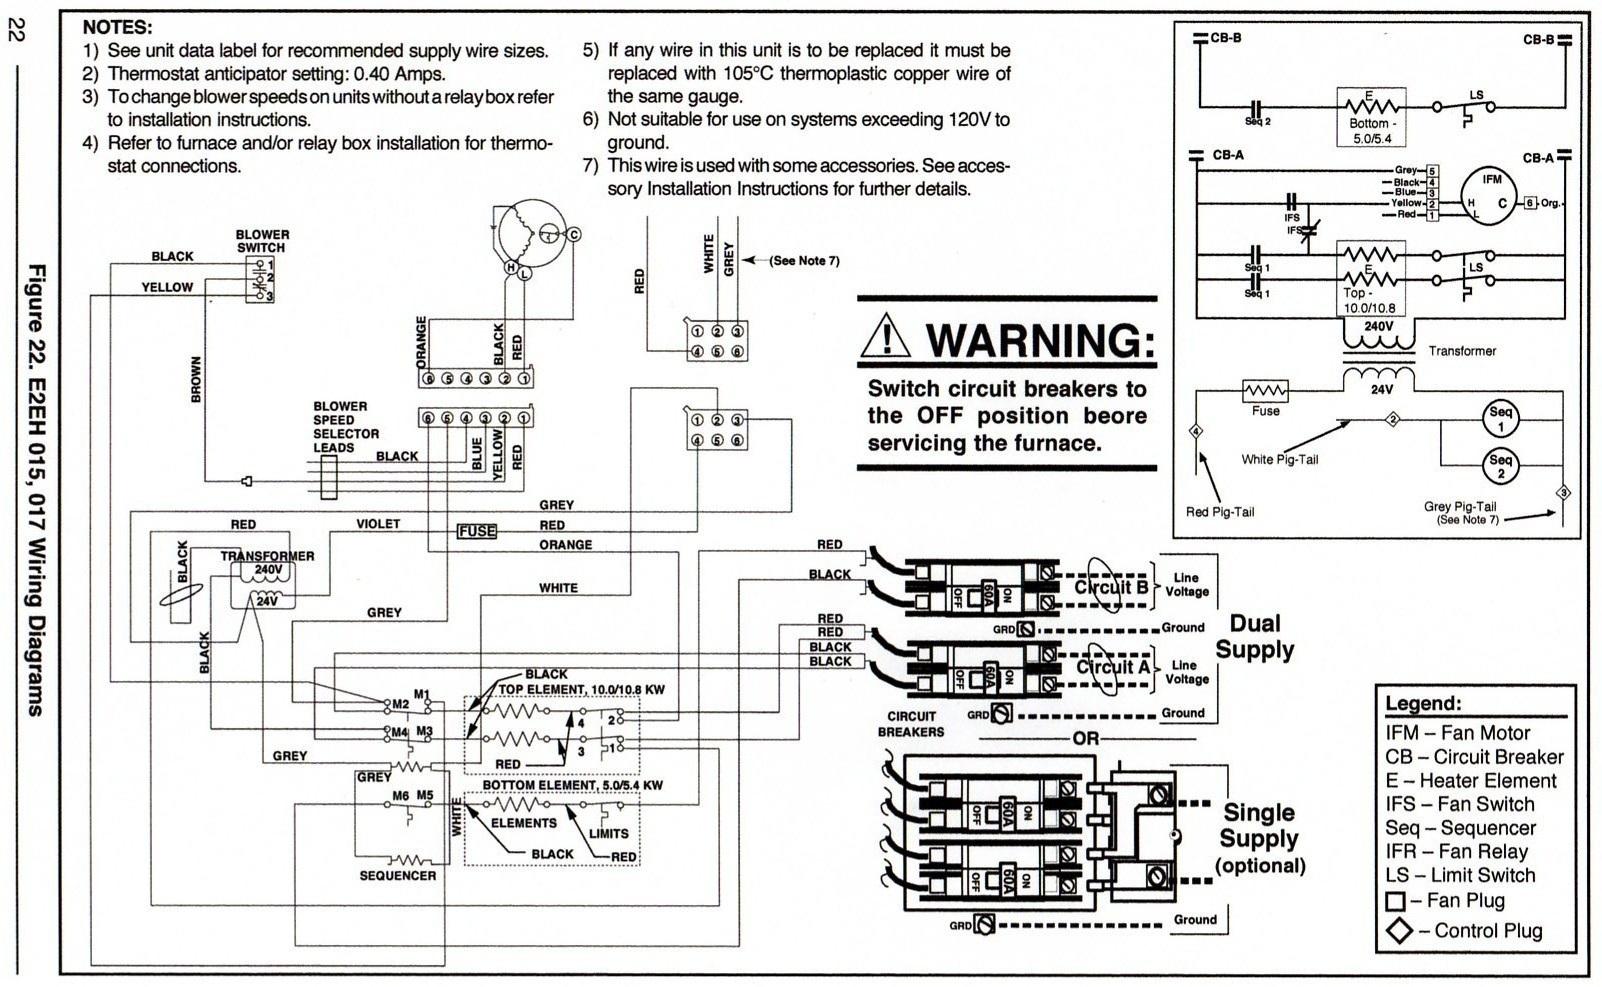 Diagram Hvac Sequencer Wiring Diagram Full Version Hd Quality Wiring Diagram Seemdiagram Eracleaturismo It